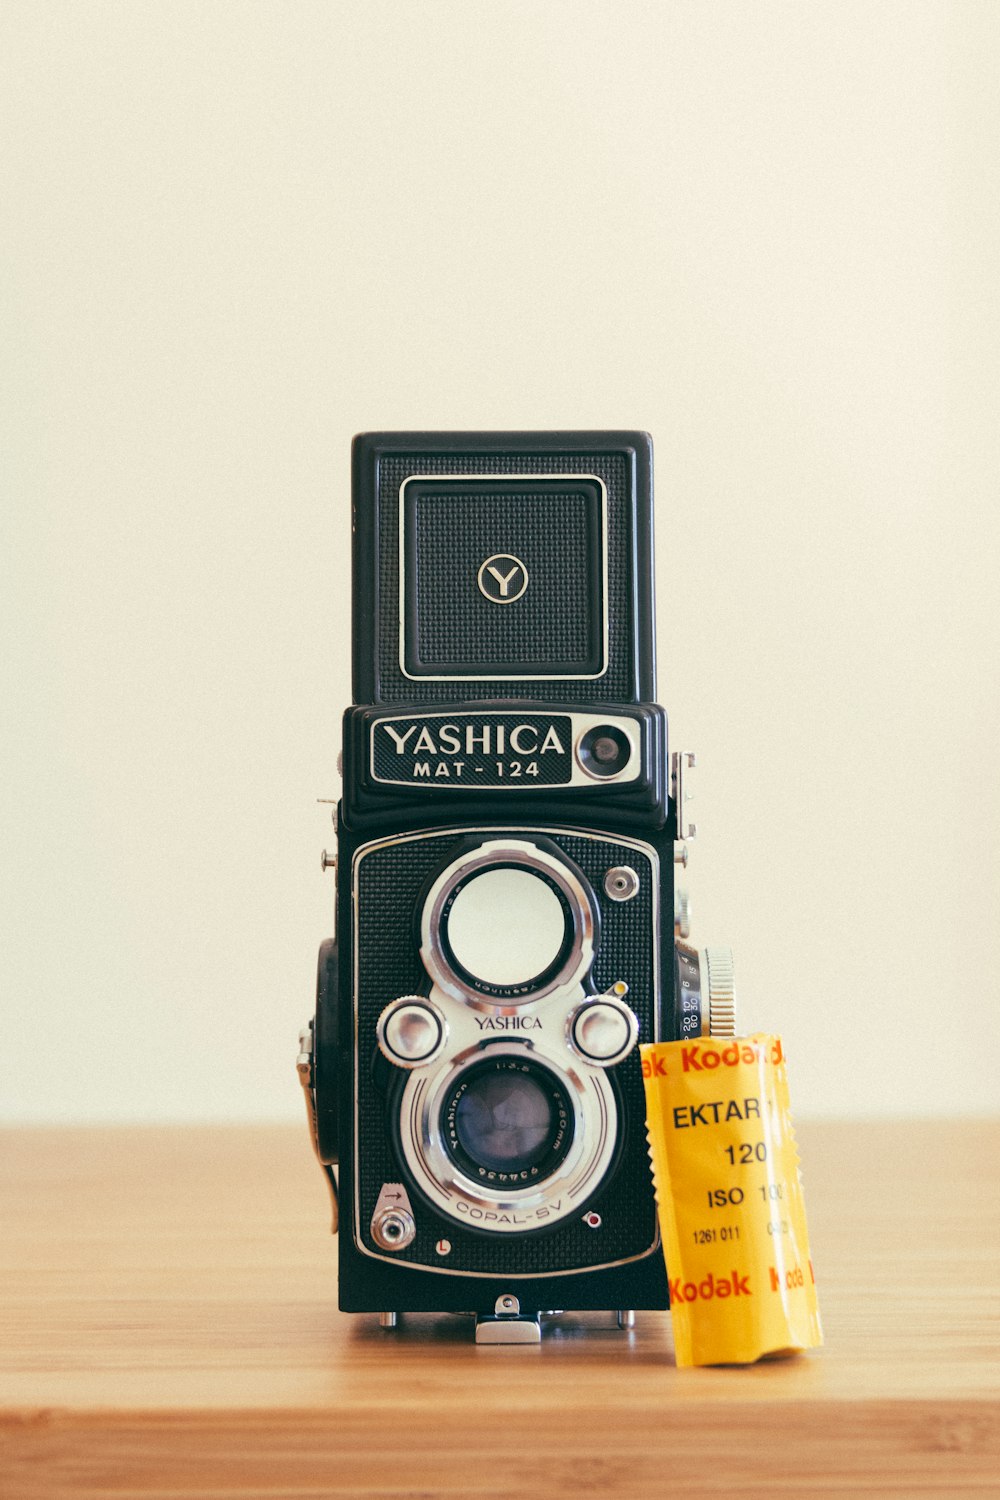 fotocamera Yashica grigia e nera su superficie marrone